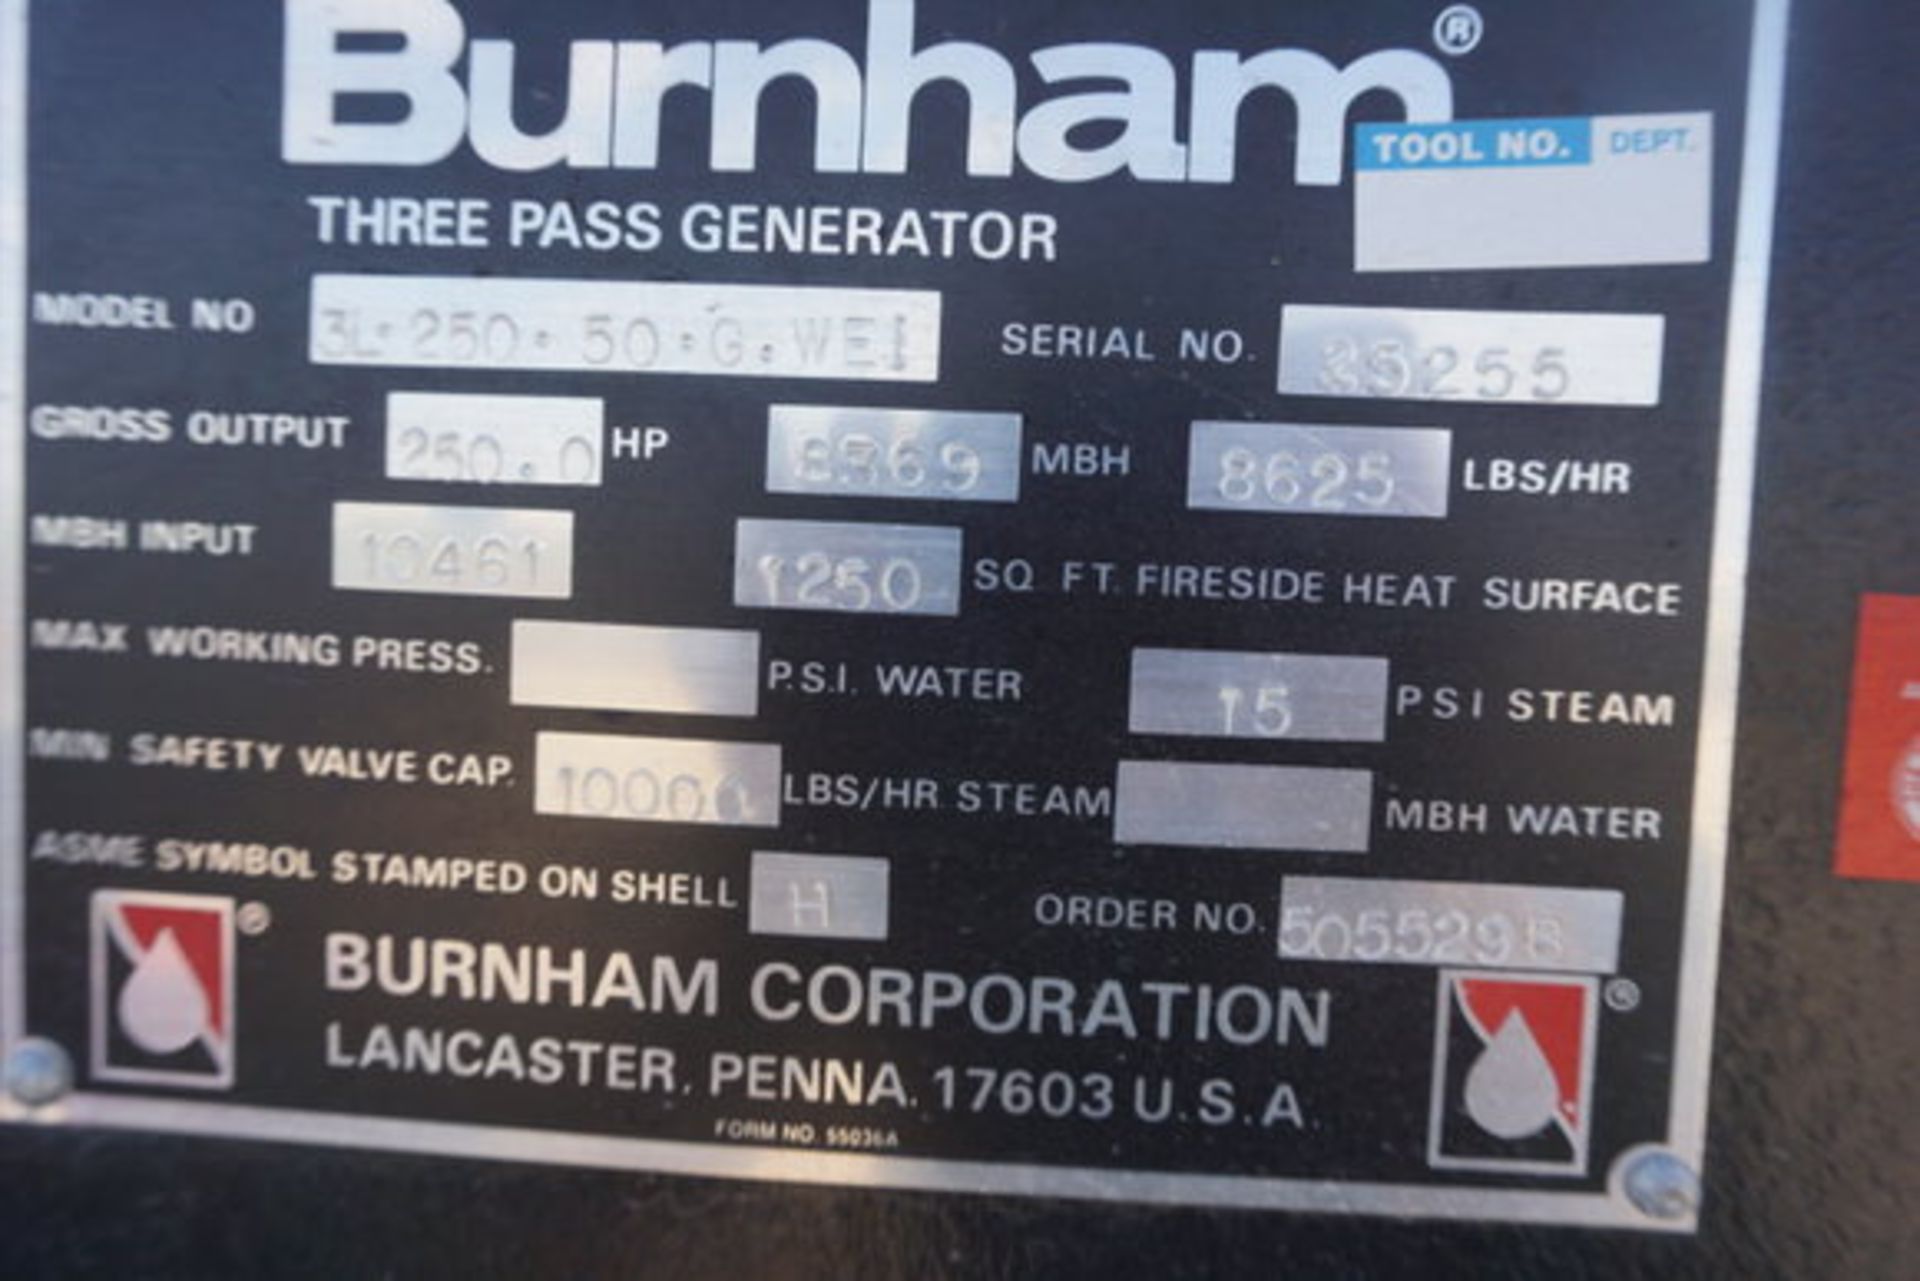 Burnham 3L-250-50G-WEI Three Pass Generator Boiler, 250hp (LOCATION: ROME, TX) - Image 15 of 22